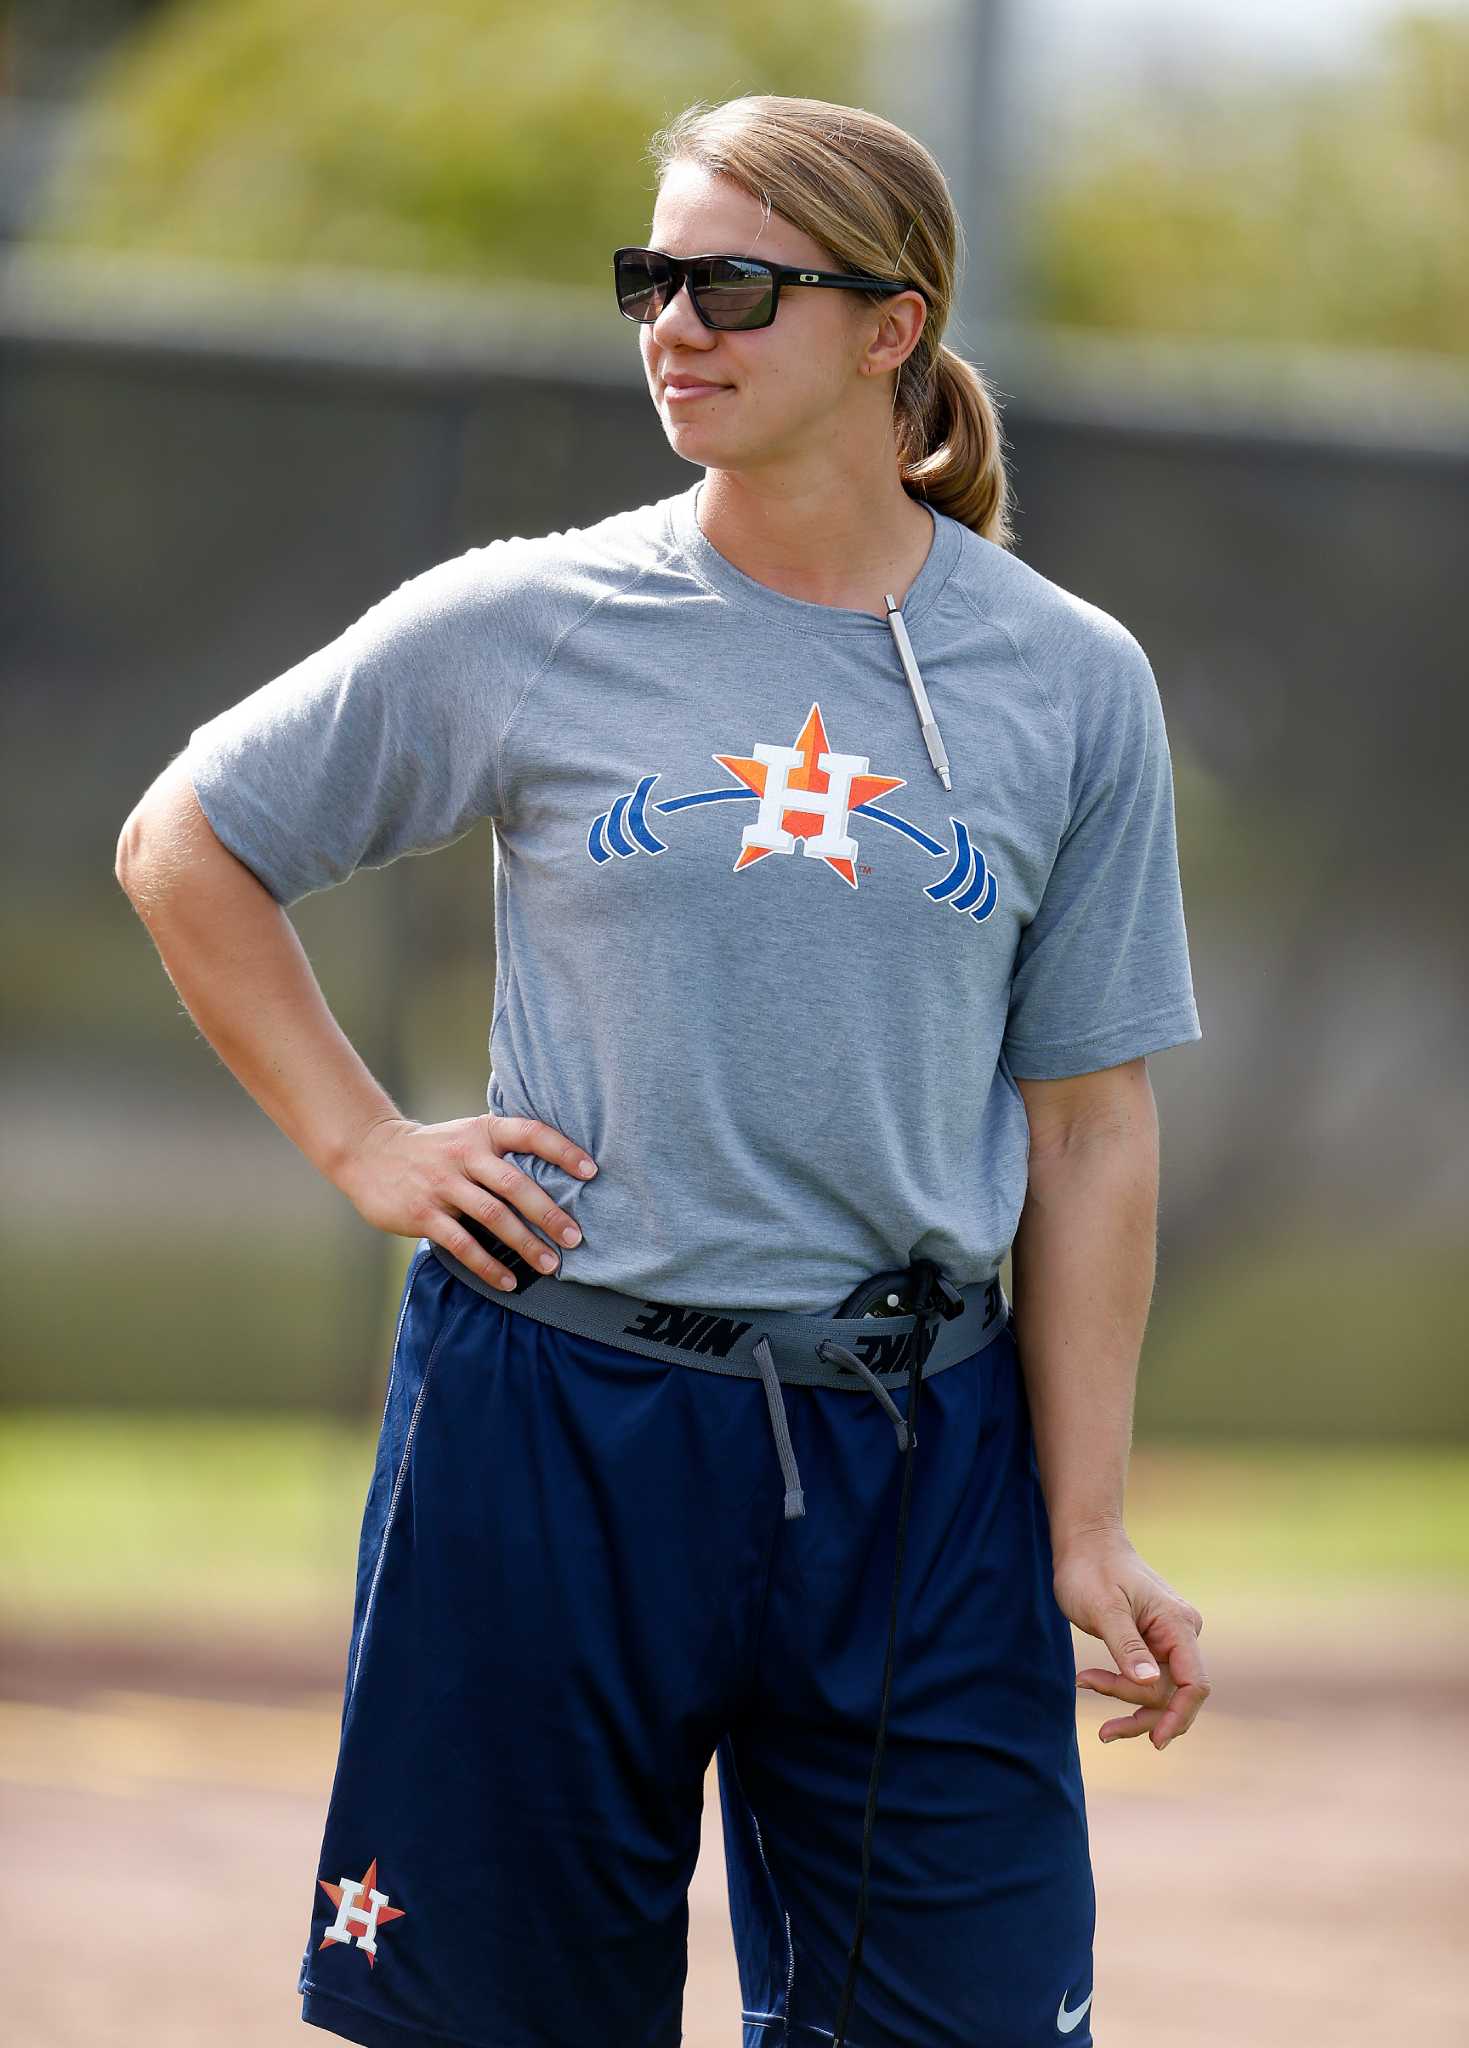 Astros' female strength coach breaks barriers